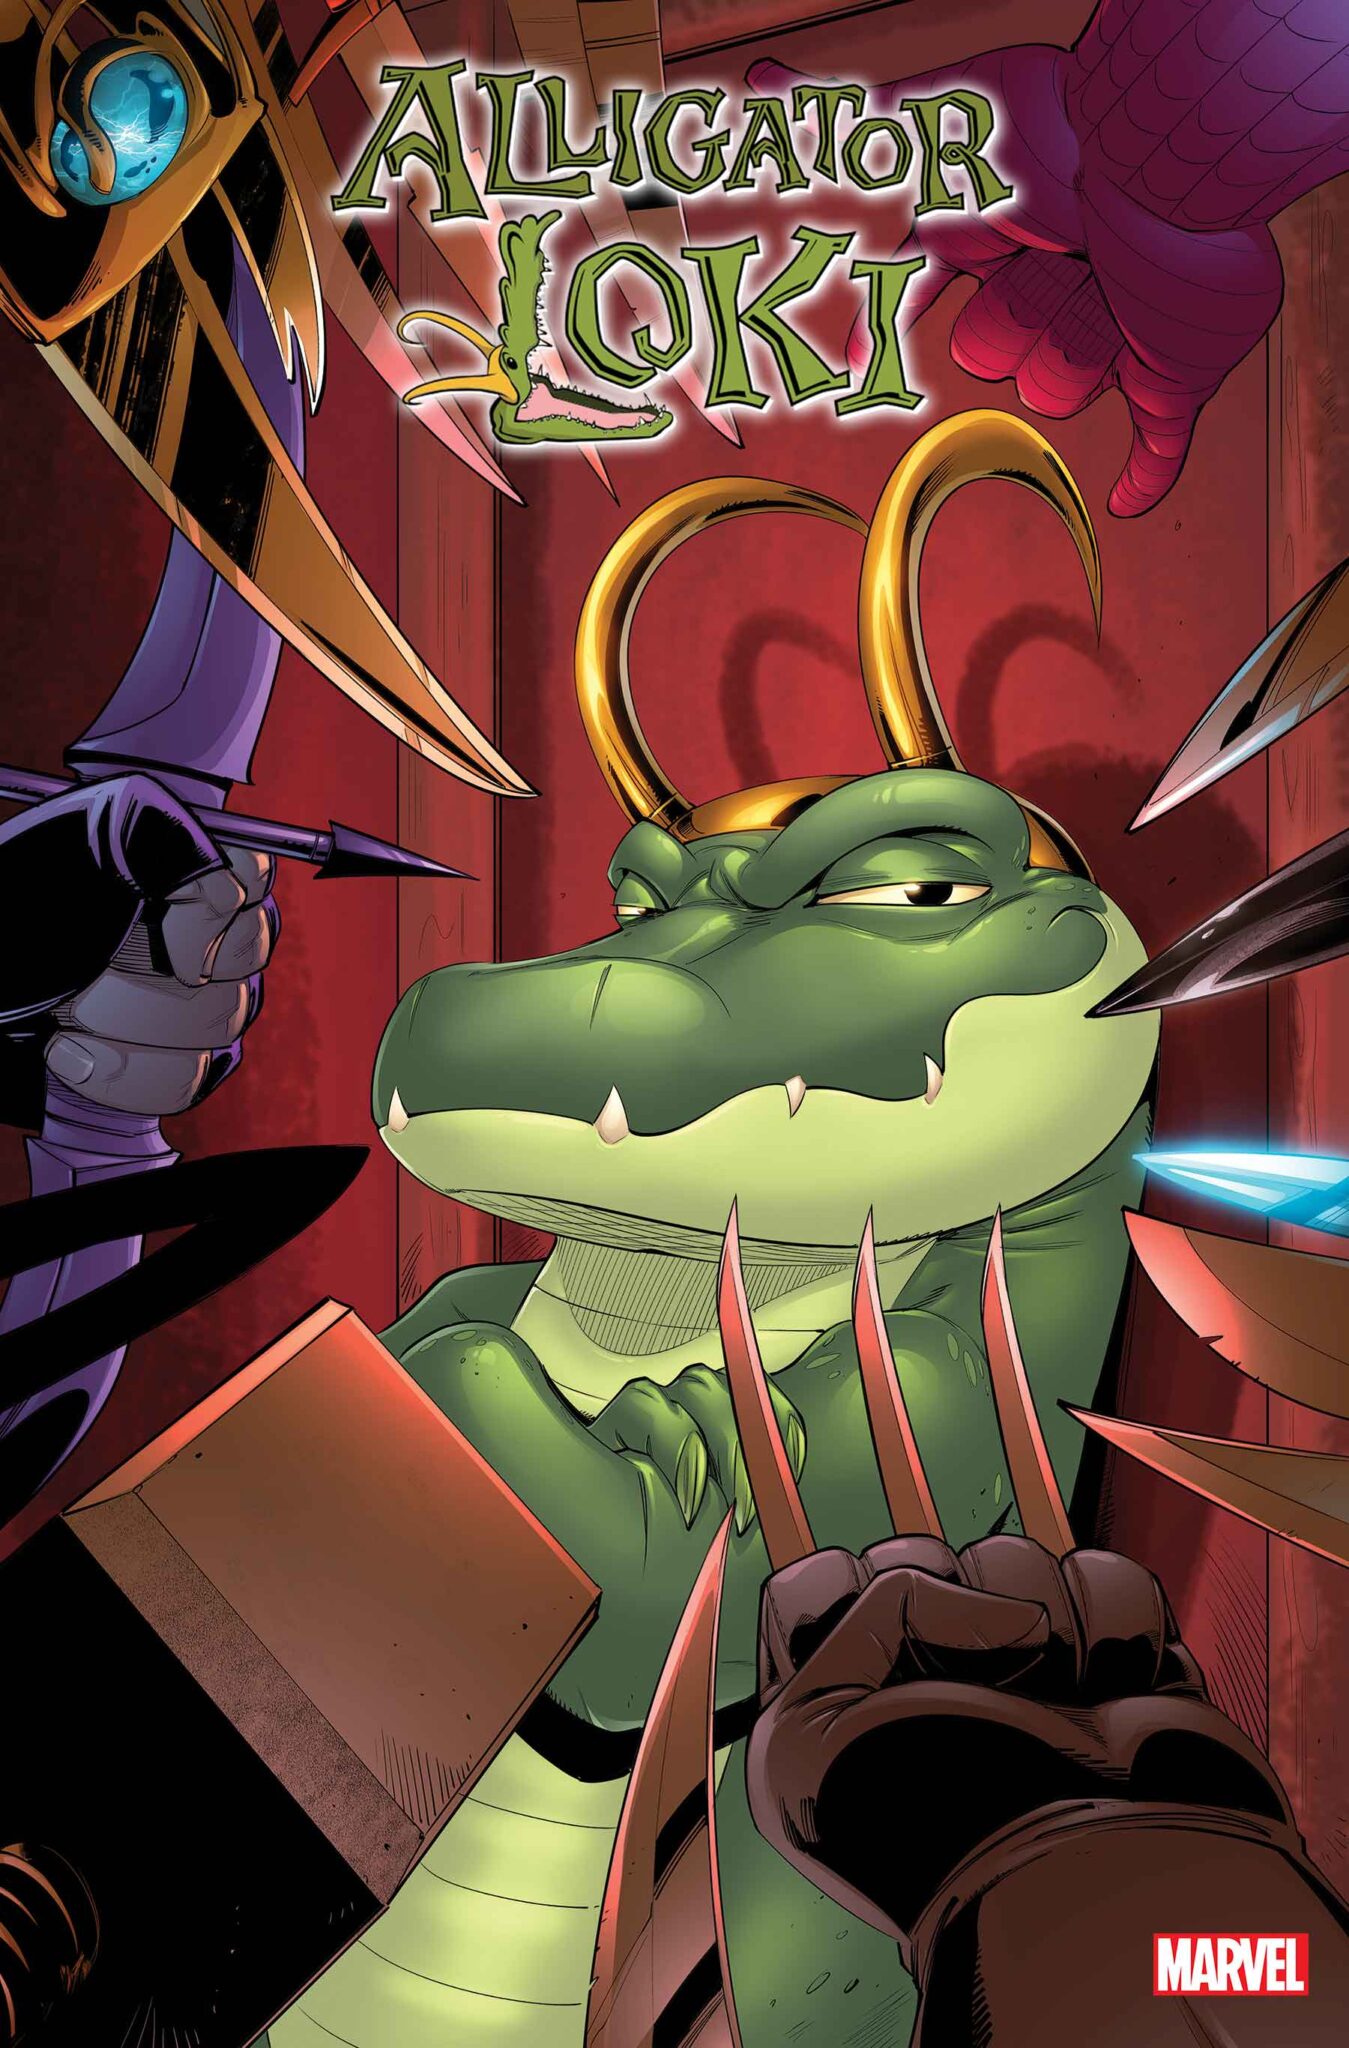 Alligator Loki #1 cover